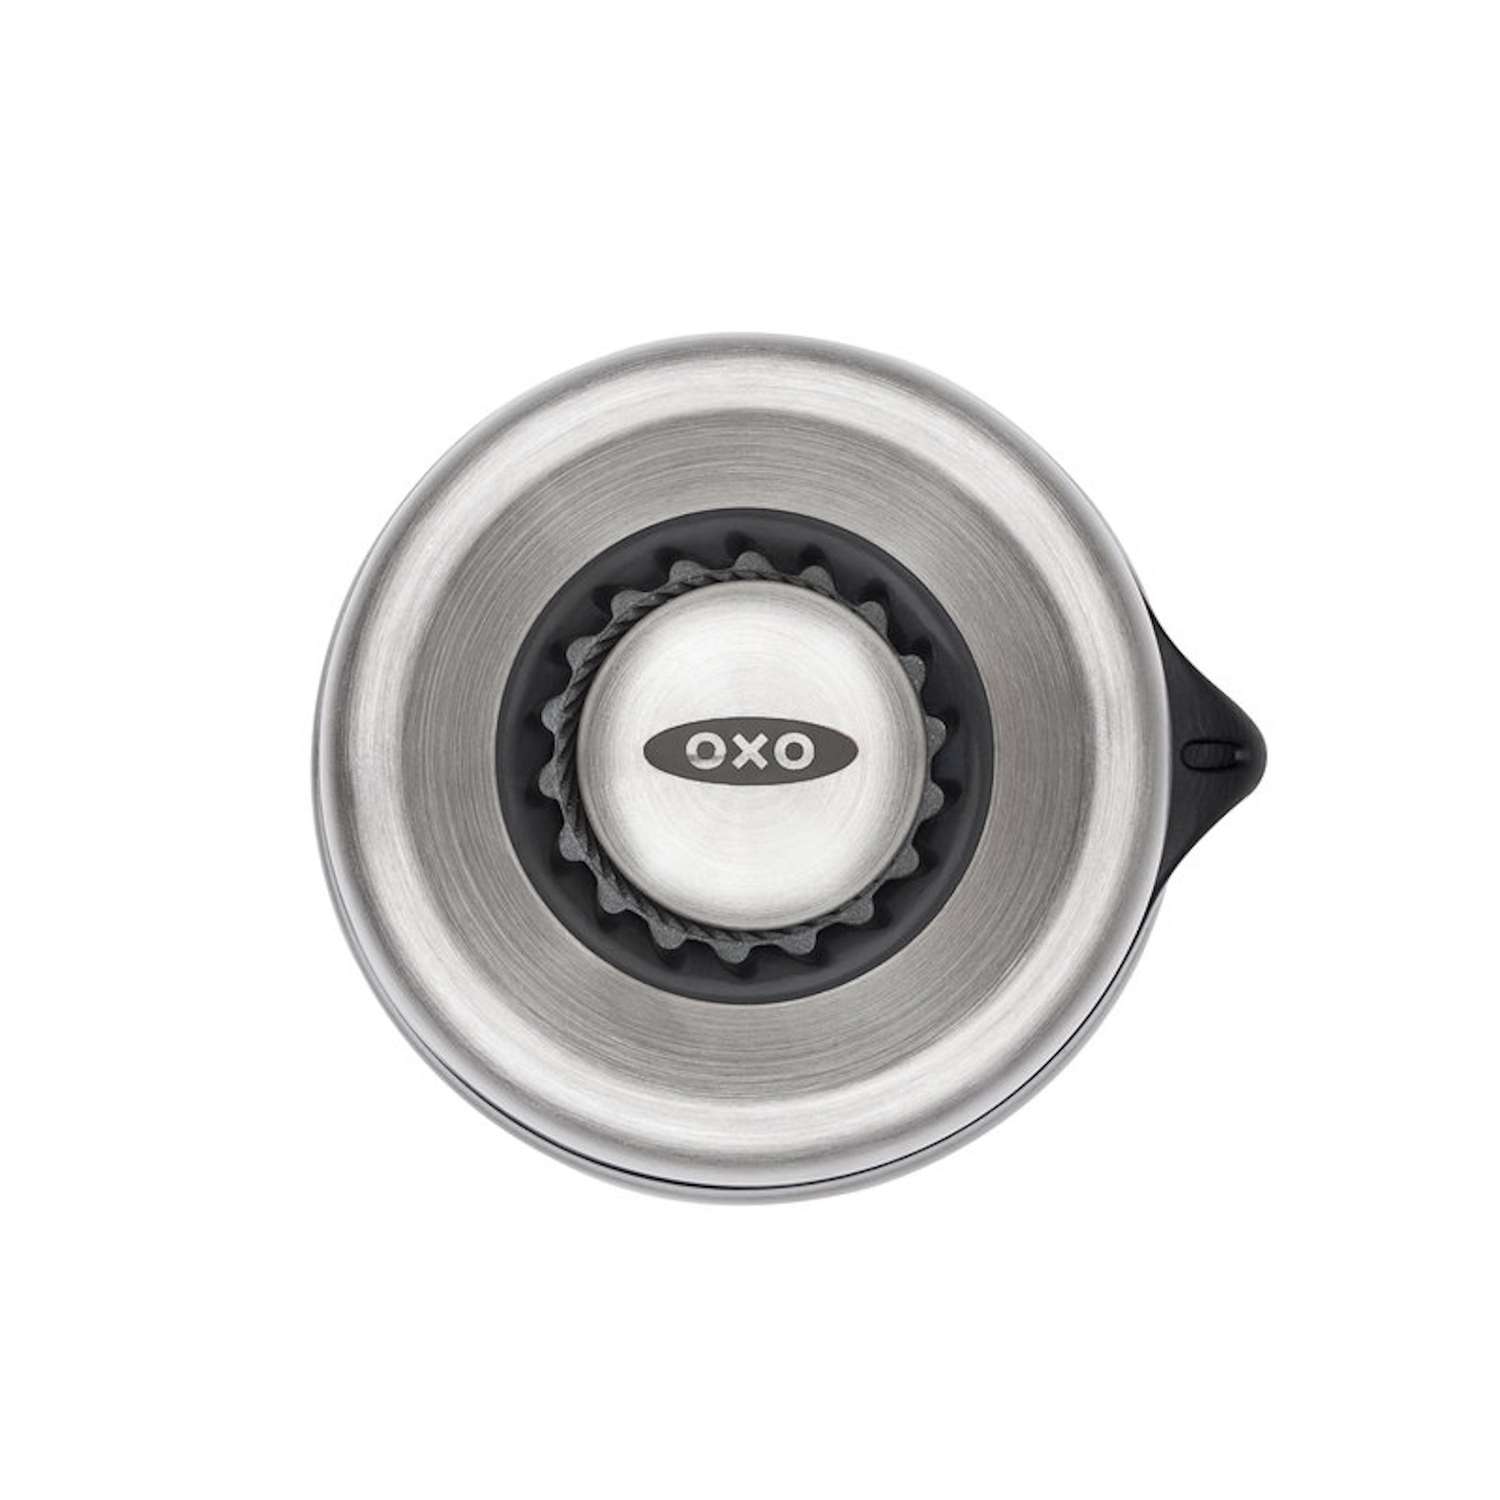  OXO Good Grips 2-in-1 Sink Strainer Stopper, Black